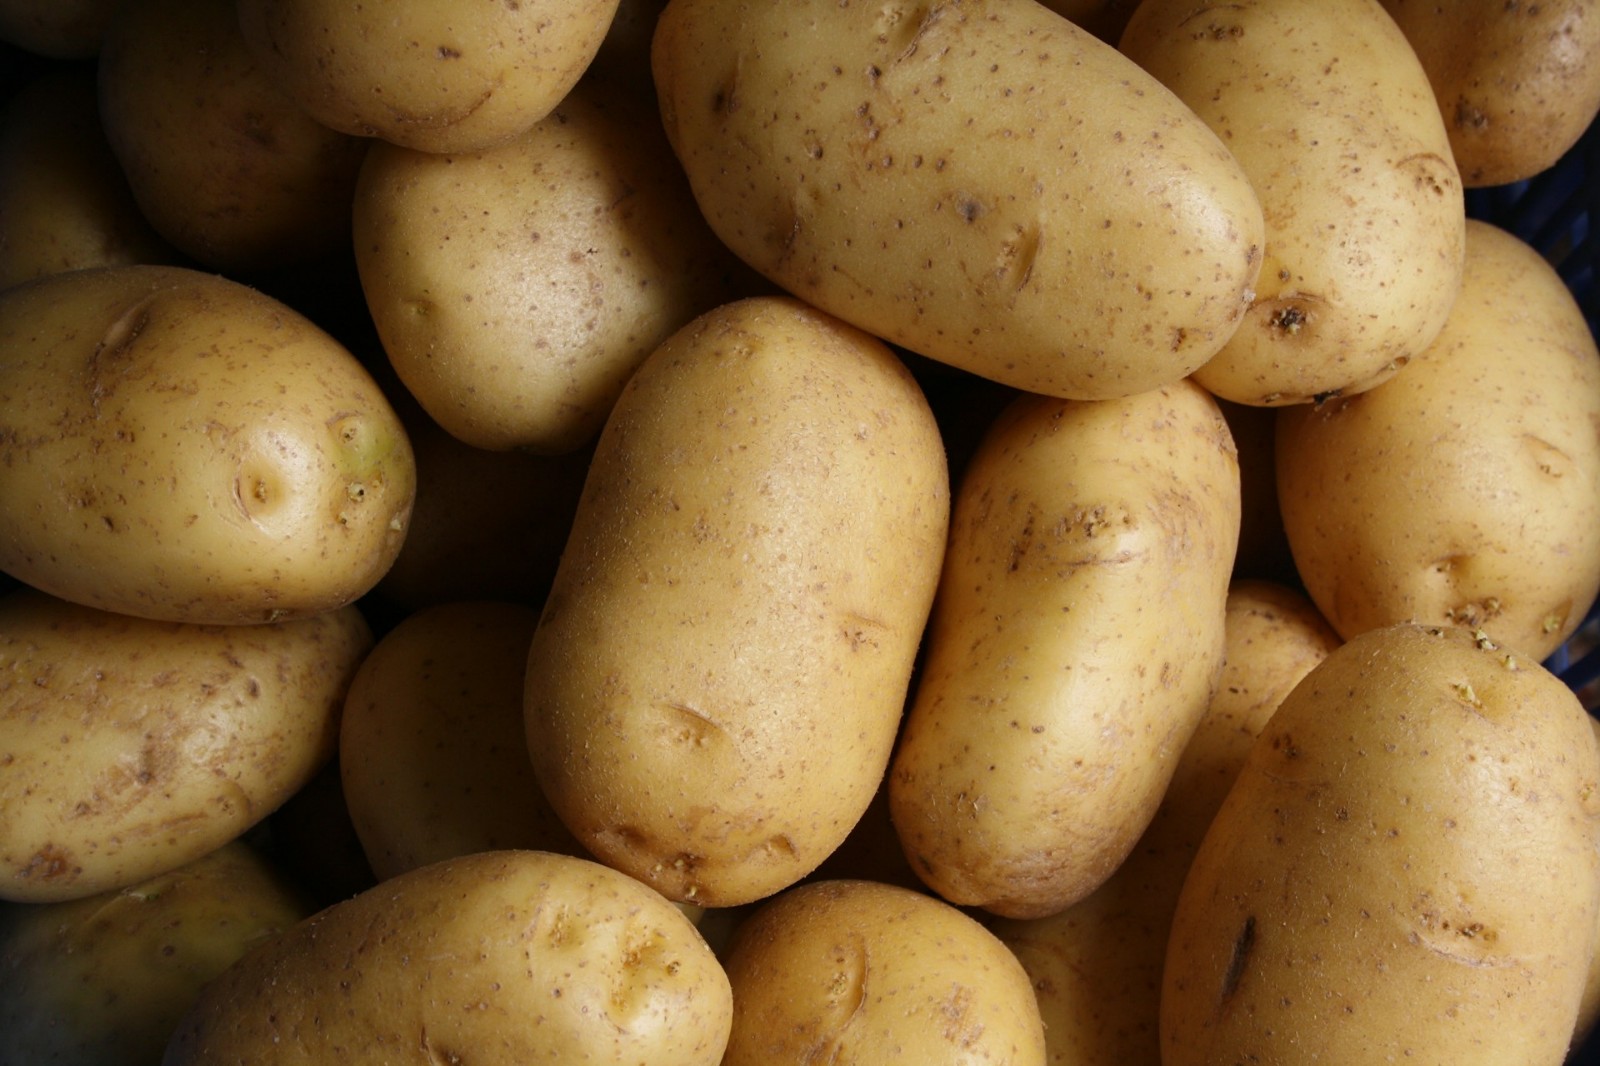 A close up of white potatoes.